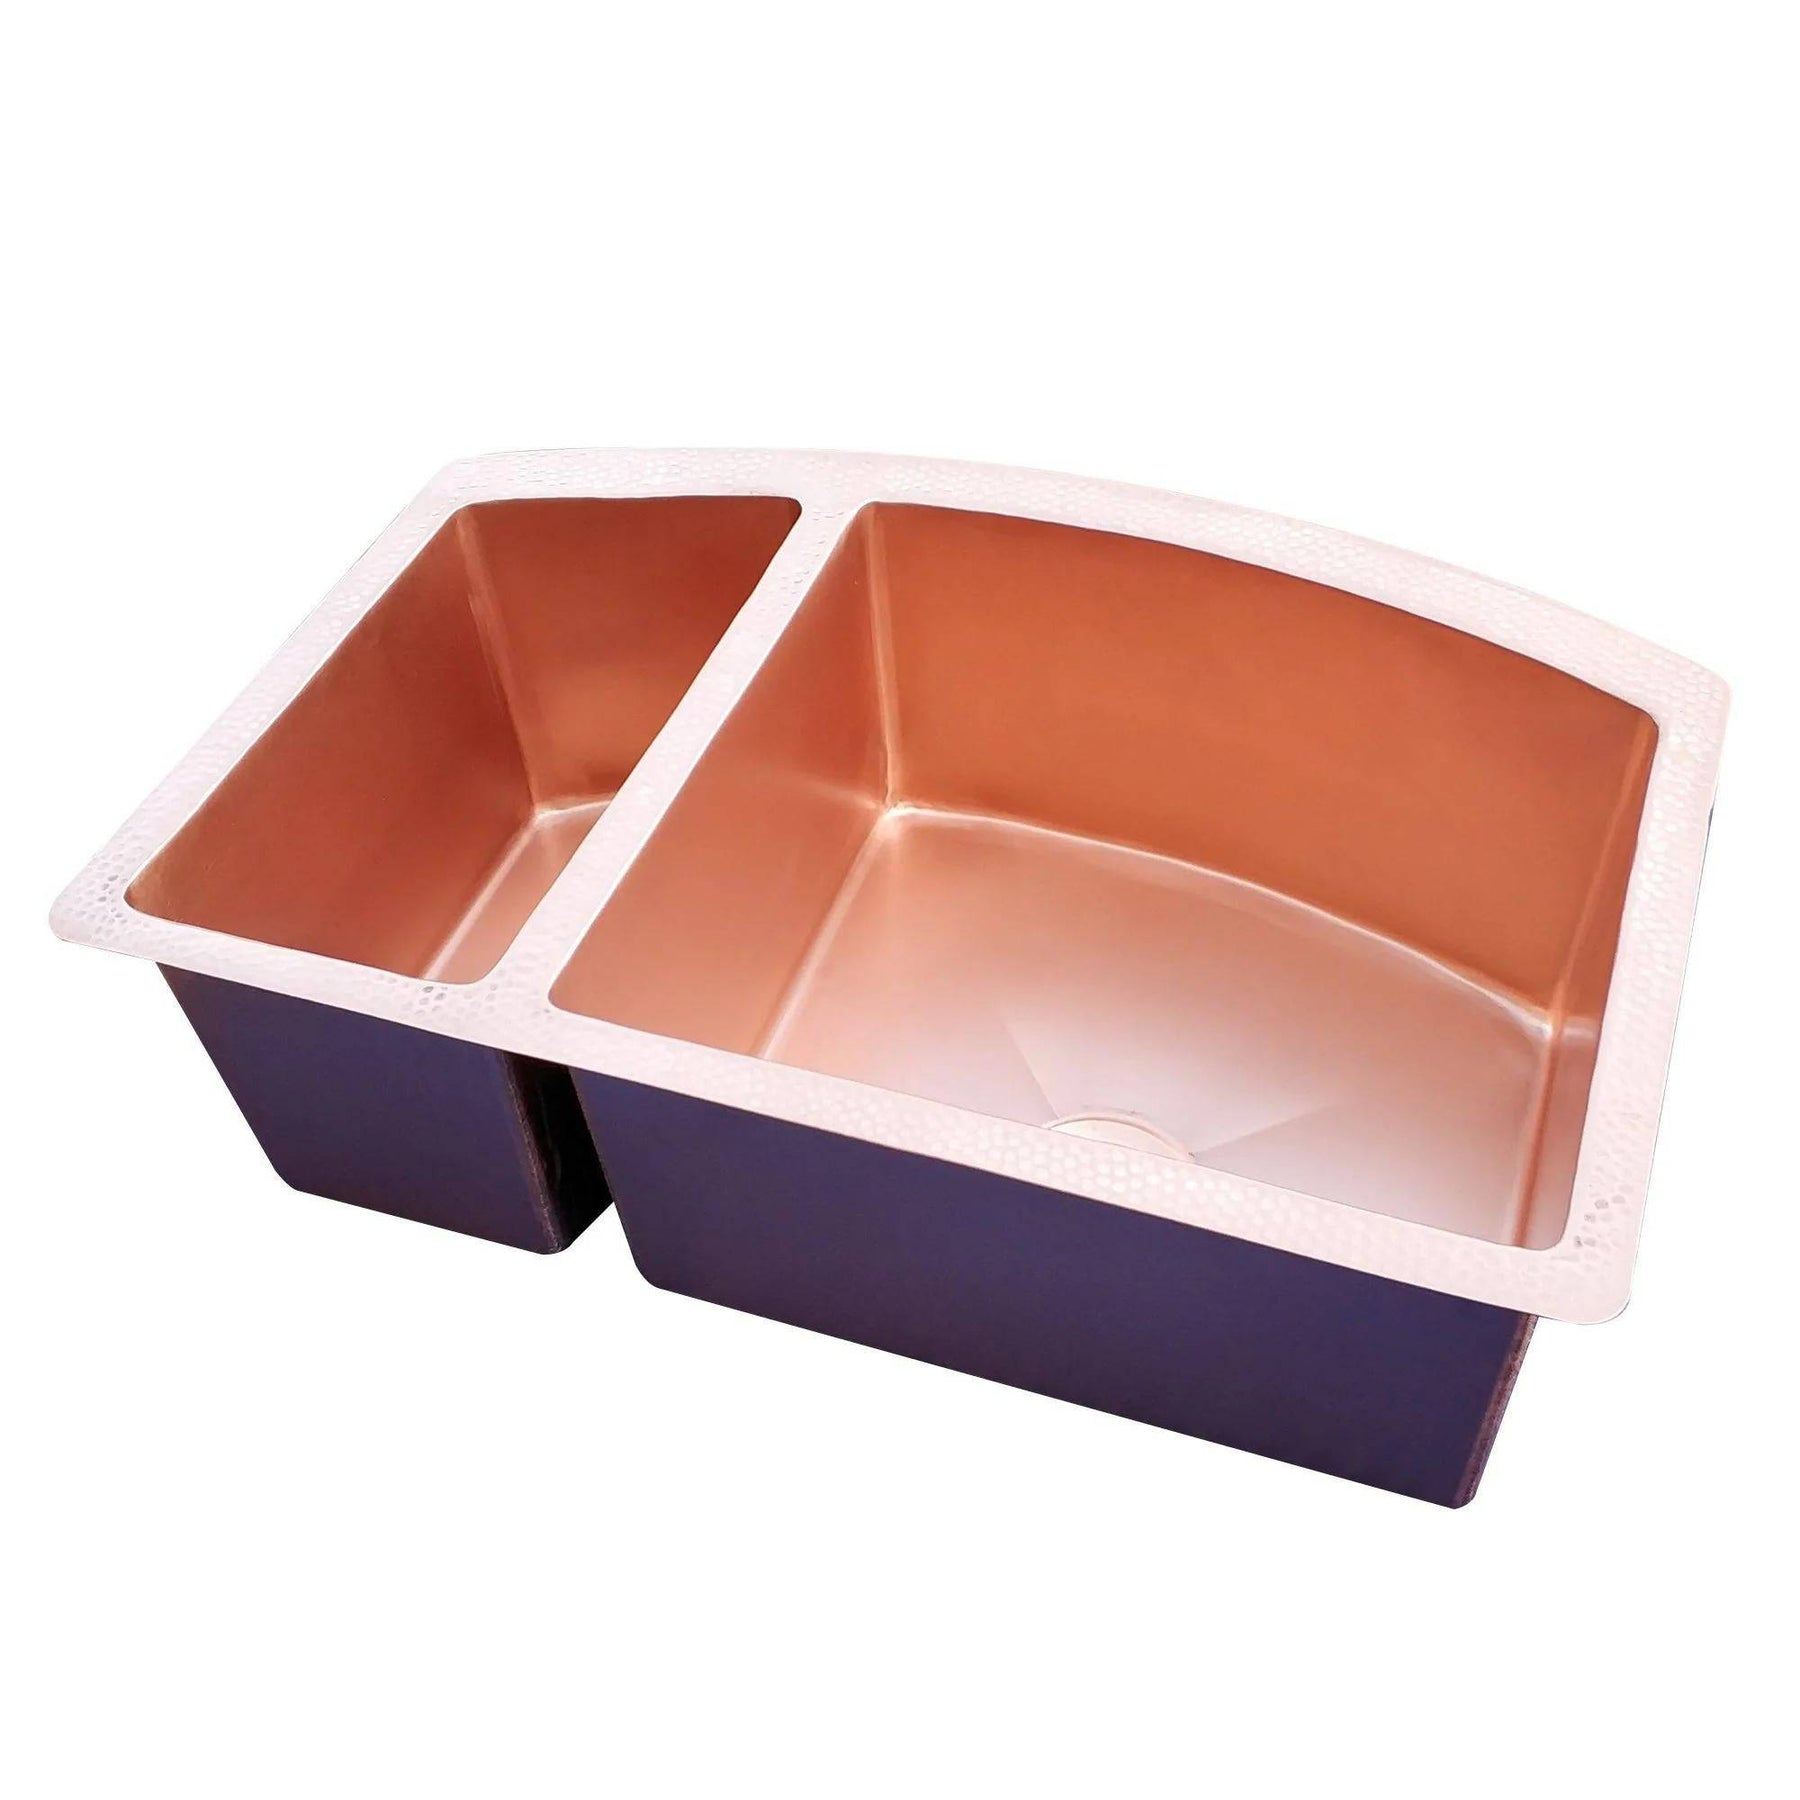 Fobest Double Bowl Natural Copper Kitchen Sink FCK-3 - Copper Sink-Fobest Appliance